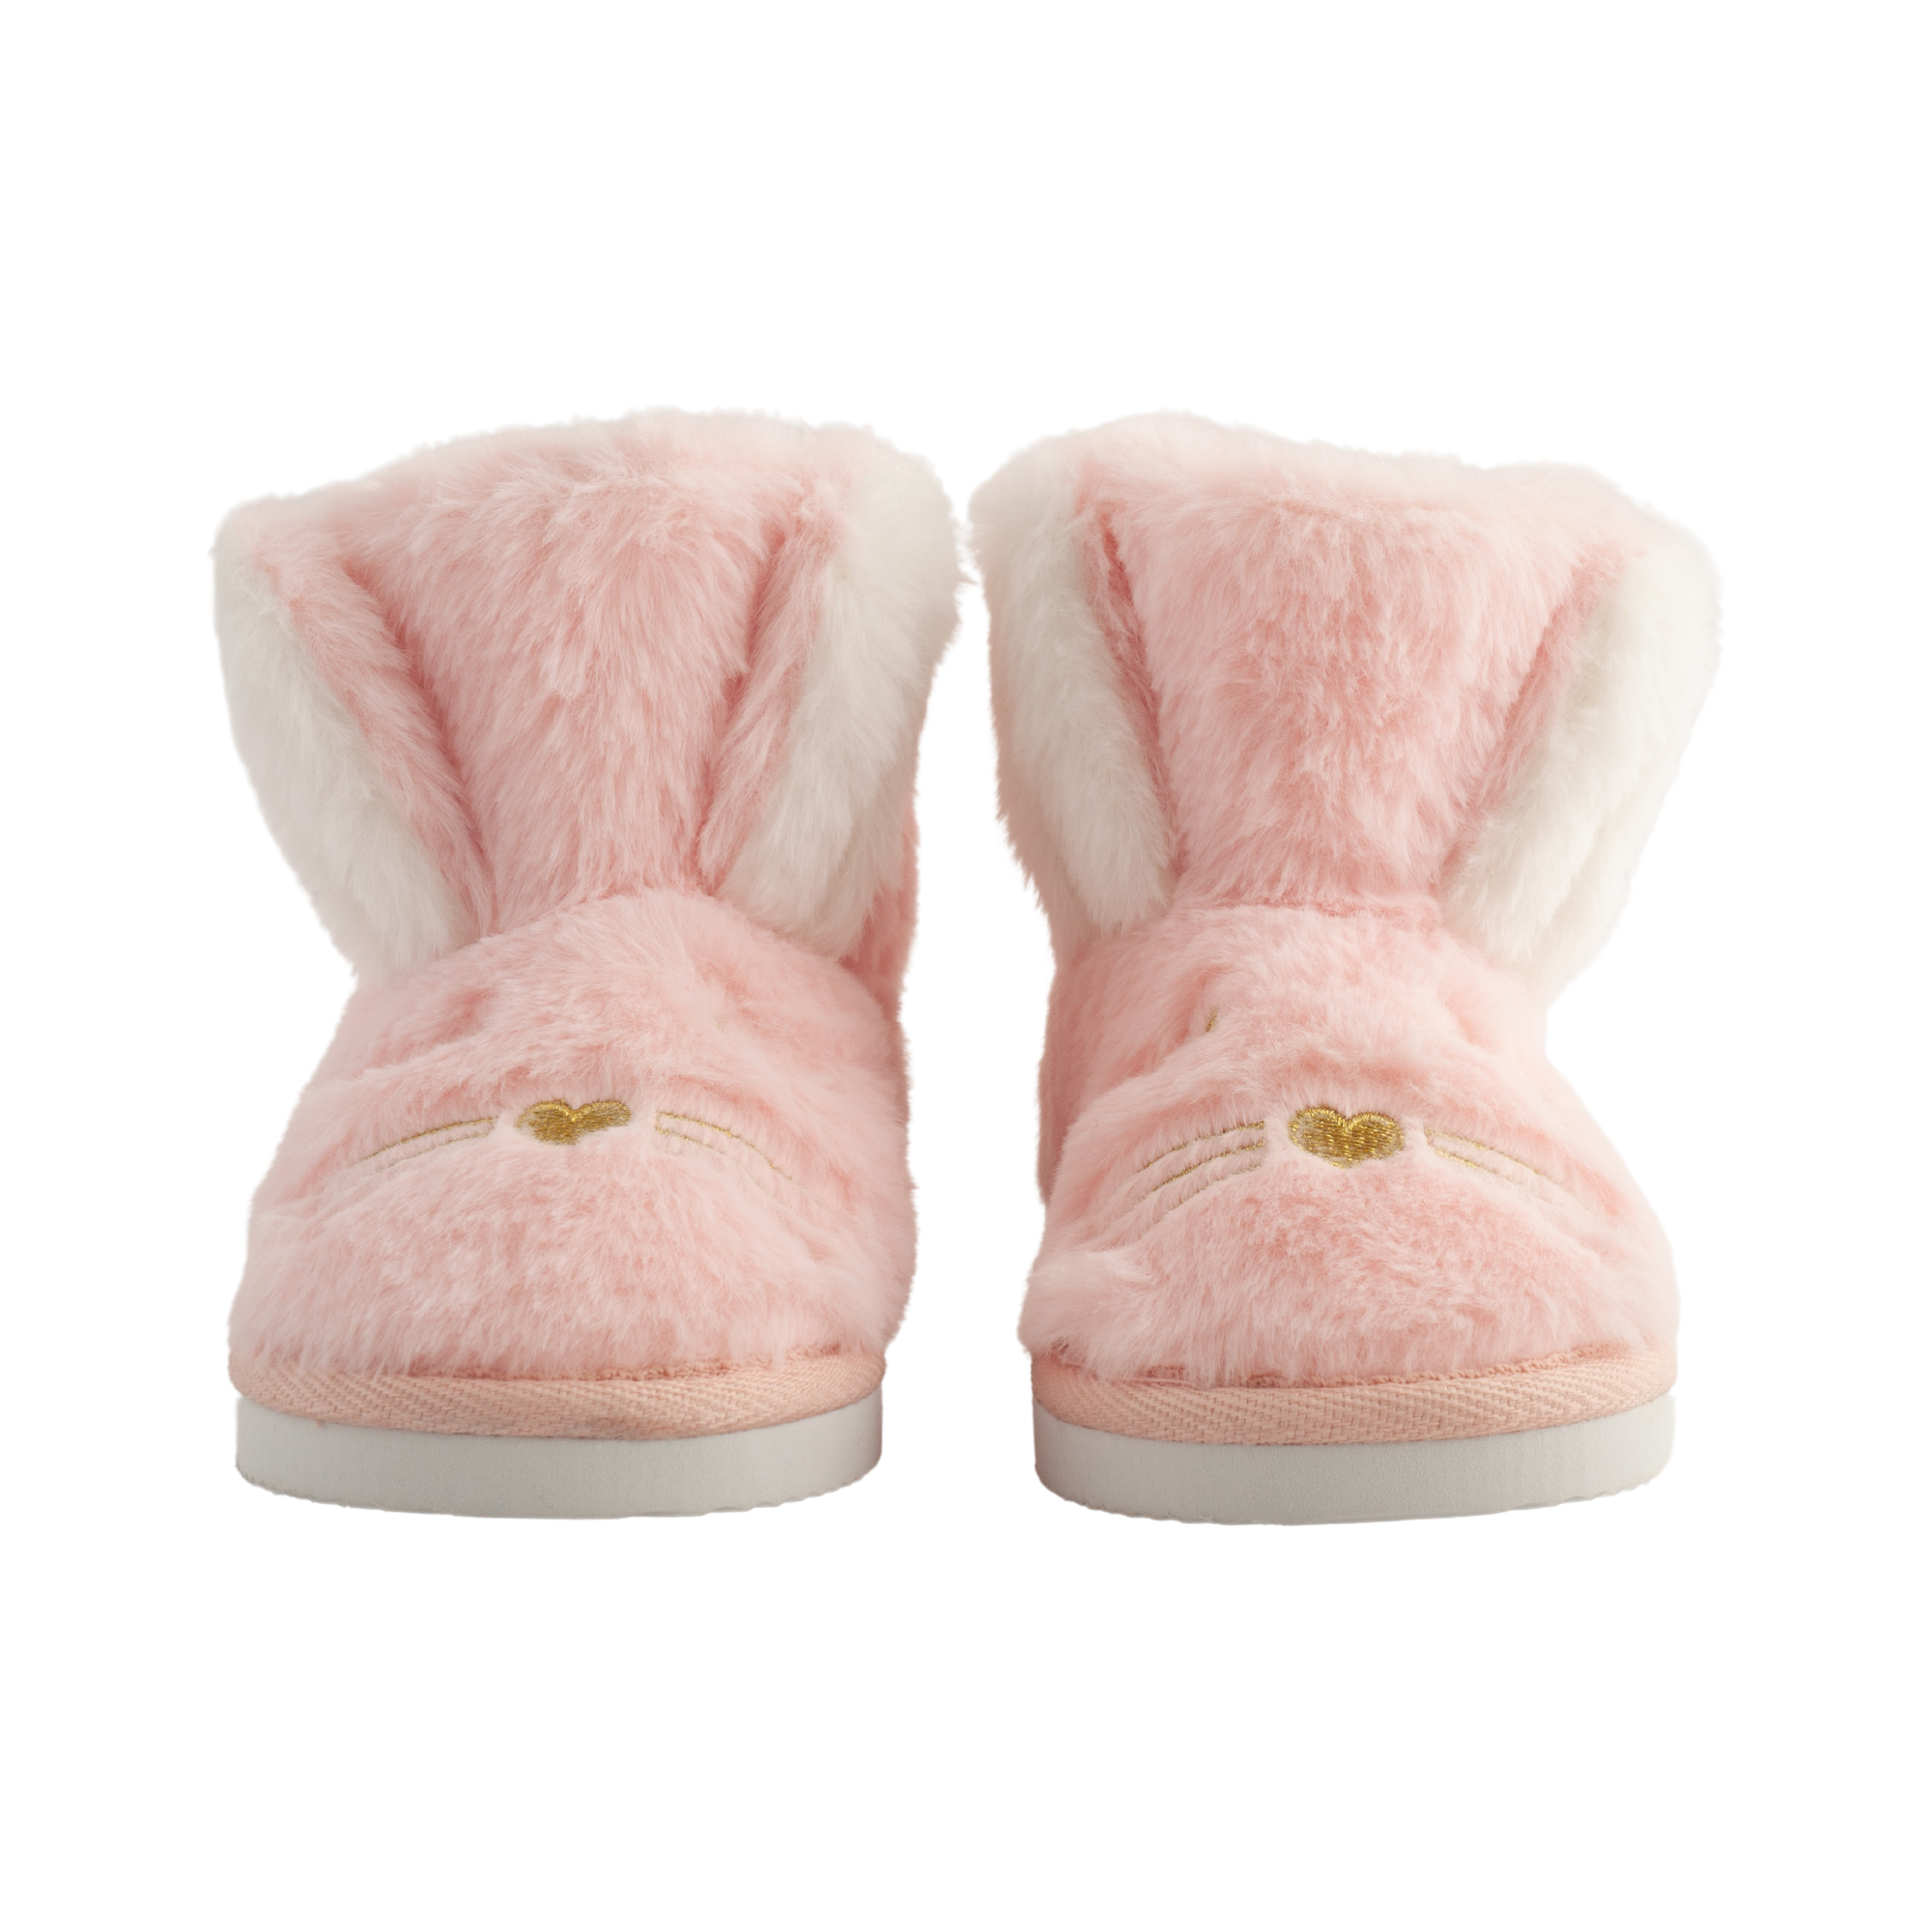 Novelty Slipper Boot - Pink Bunny Size 2-3